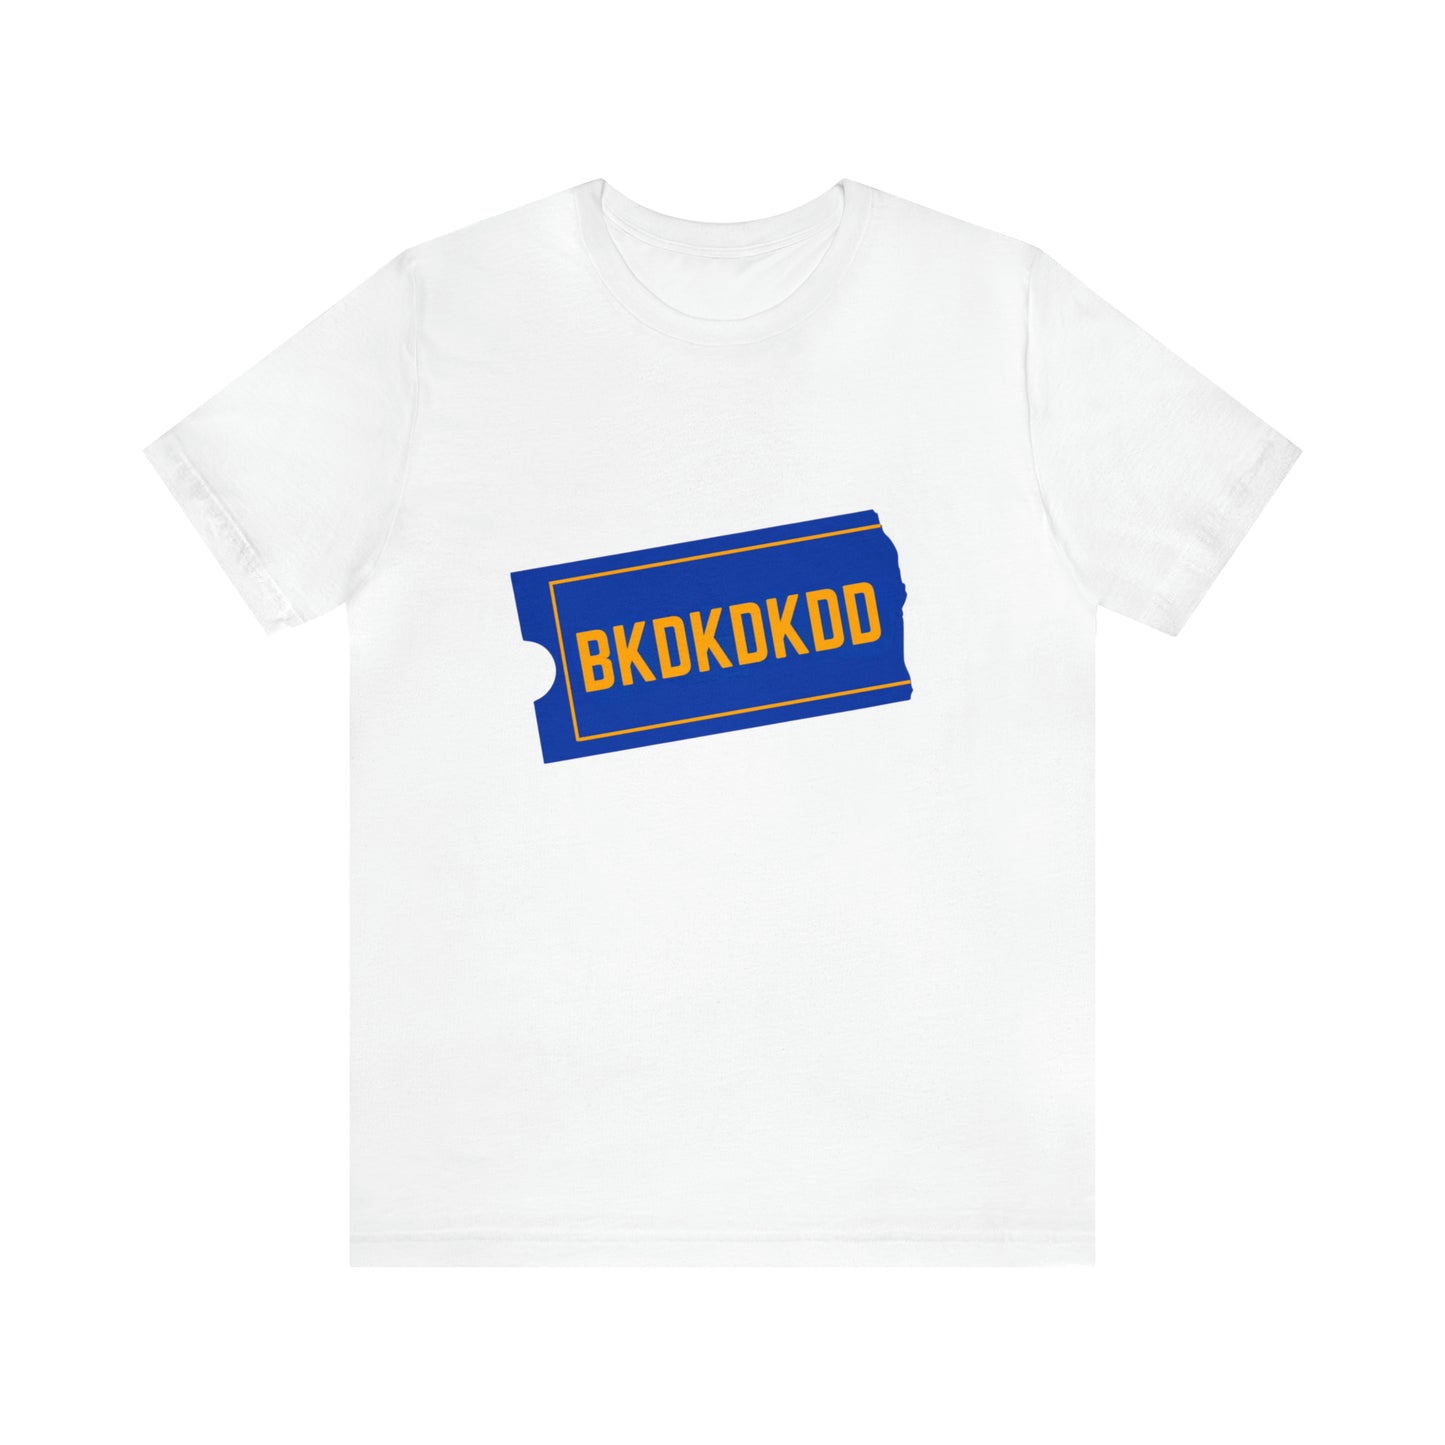 BKDKDKDD Block Buster Style Unisex DMB T-Shirt